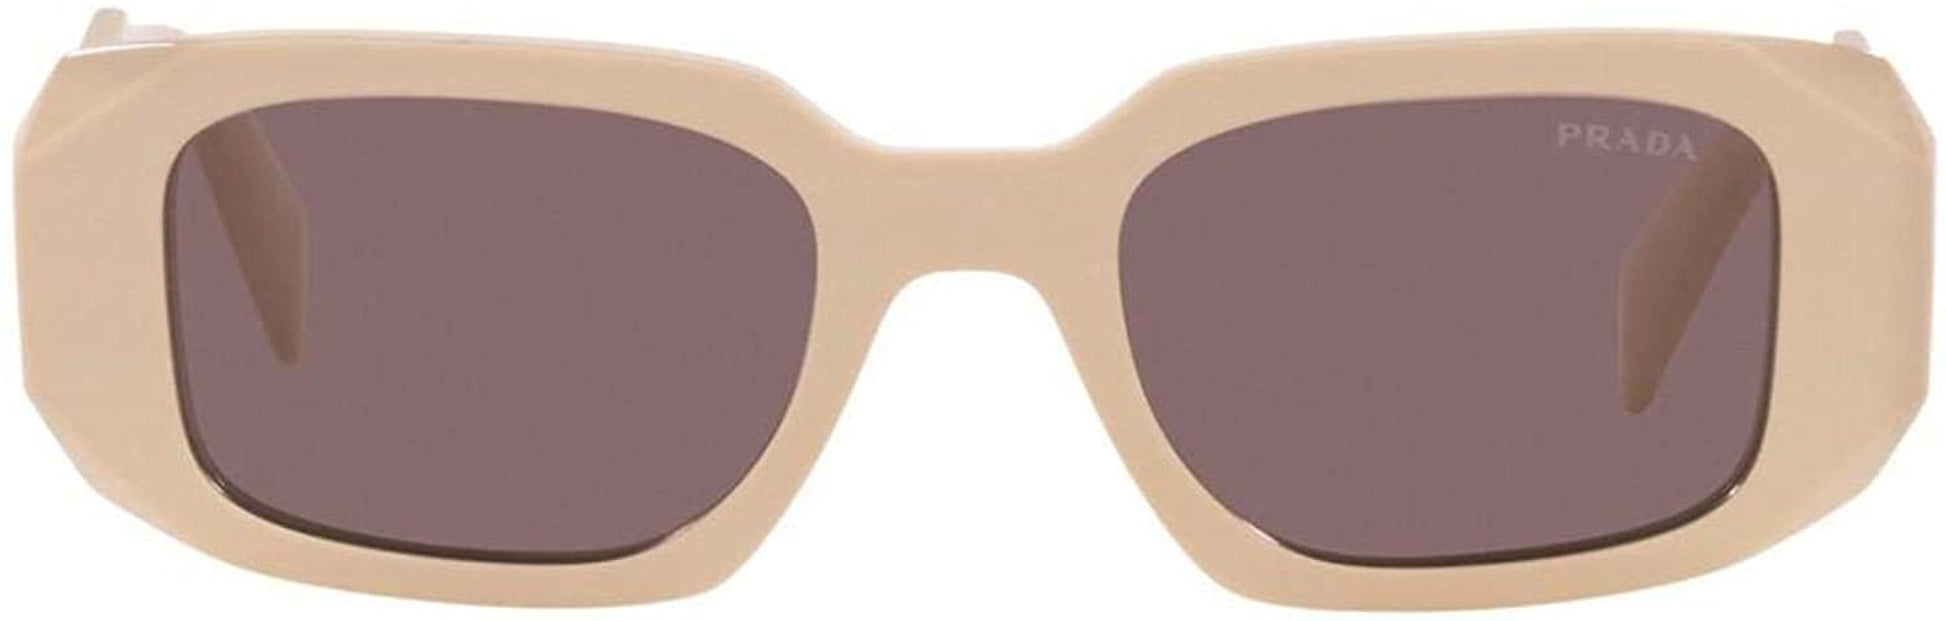 Purple Brown Rectangular Ladies Sunglasses PR 17WS VYJ6X1 49